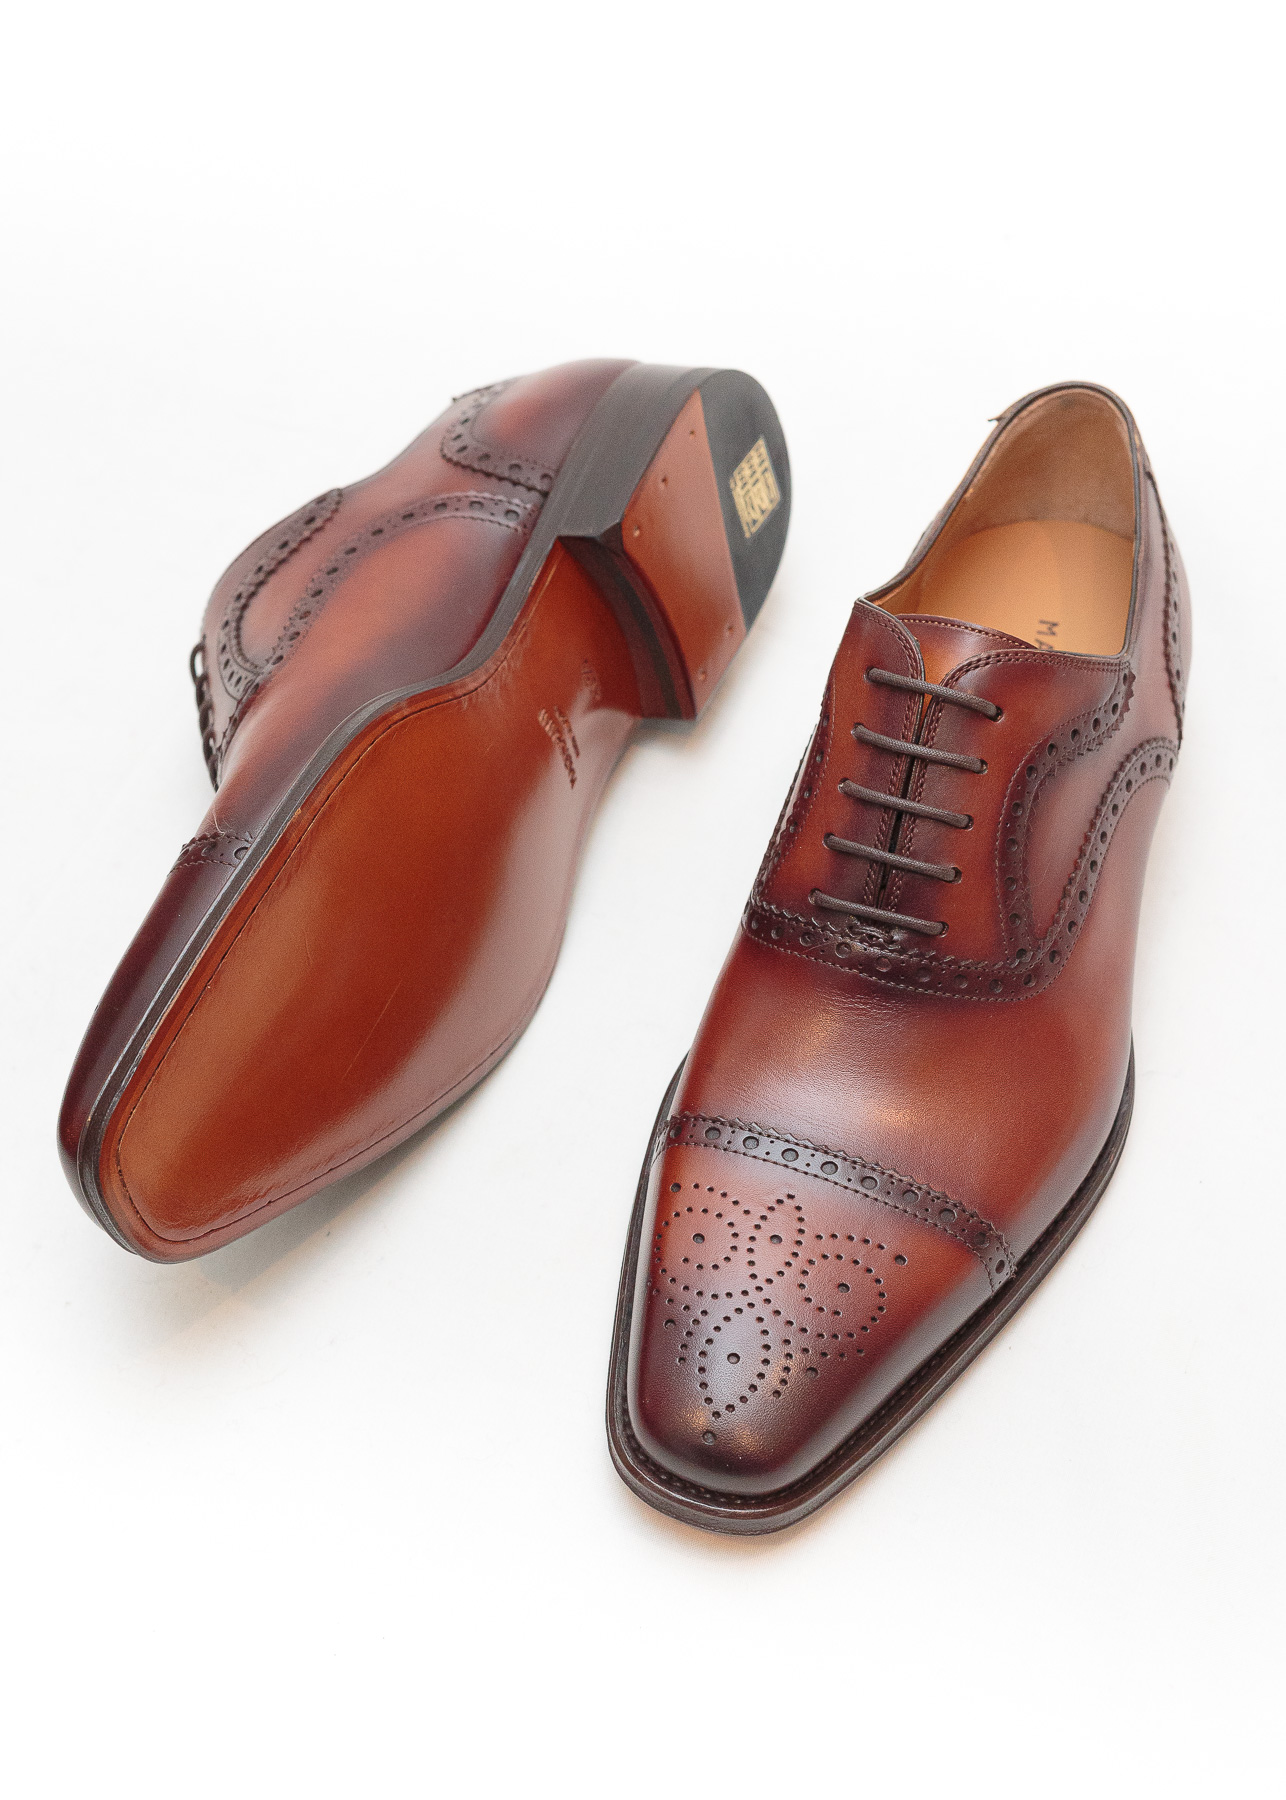 Classic Boutique – Magnanni Brown Oxford Brogue Shoes (€250)